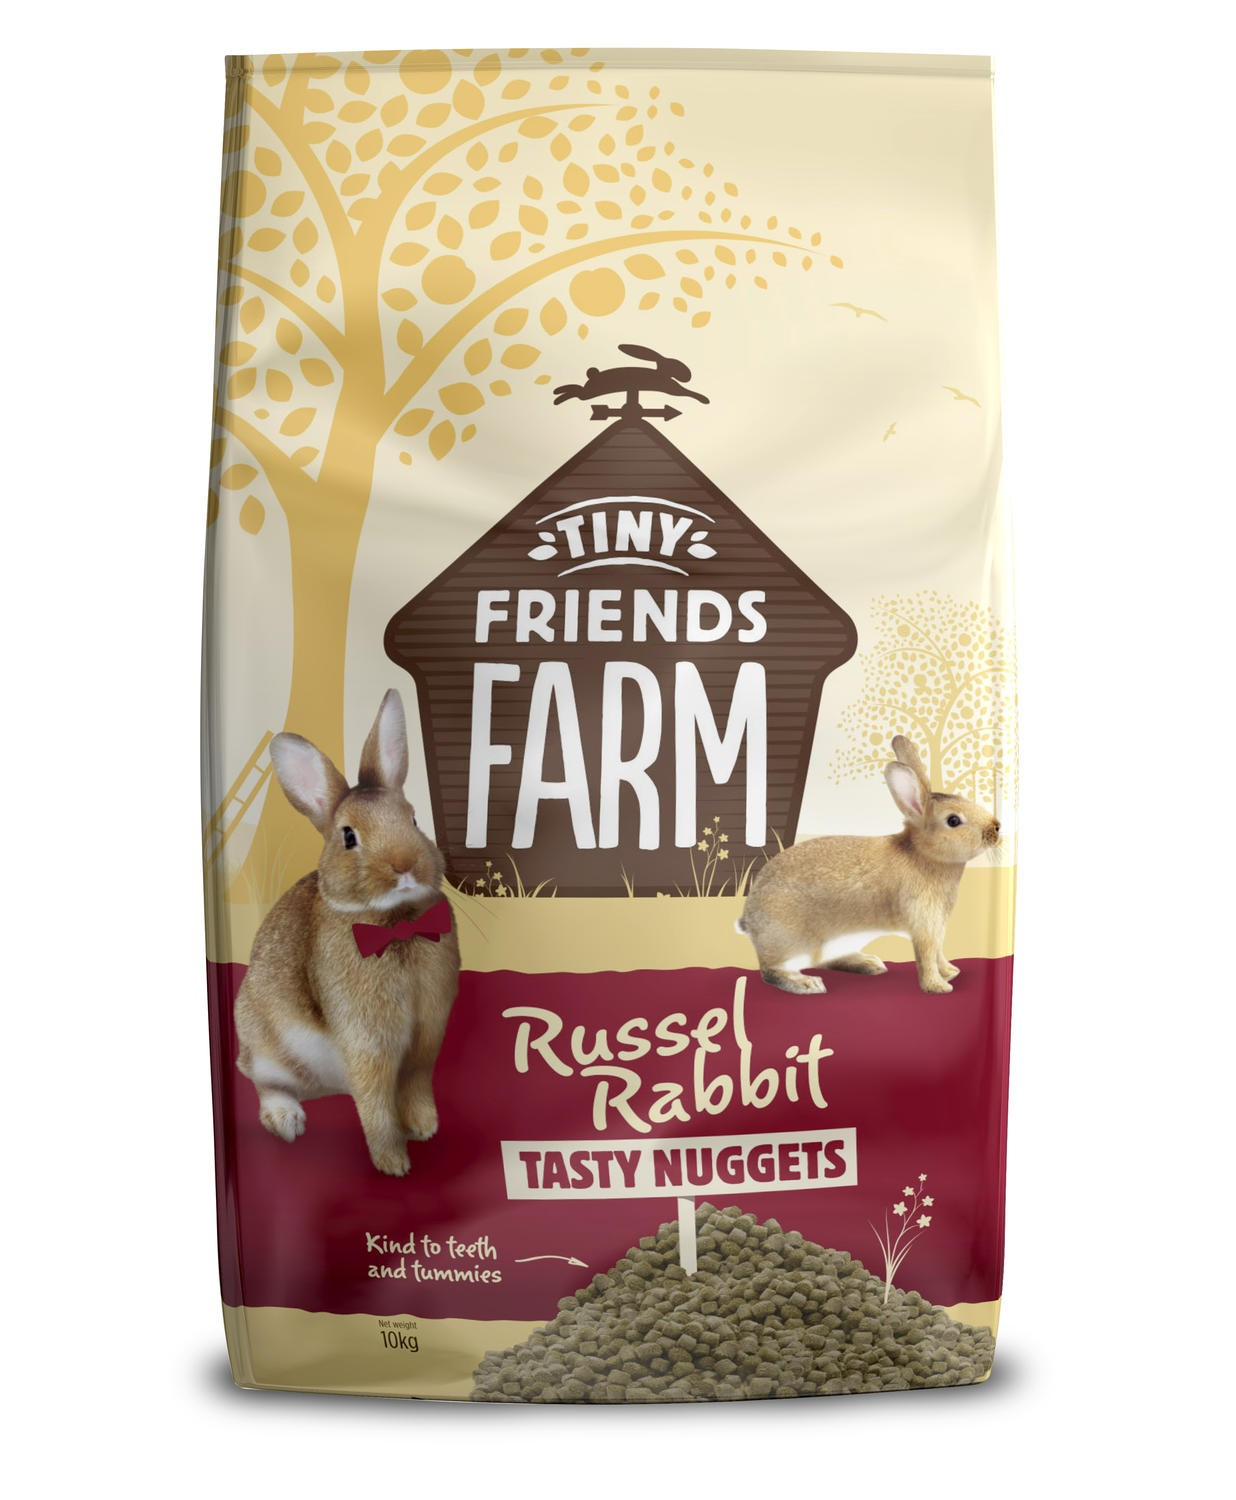 Tiny Friends Farm Russell Rabbit Tasty Nuggets coelho